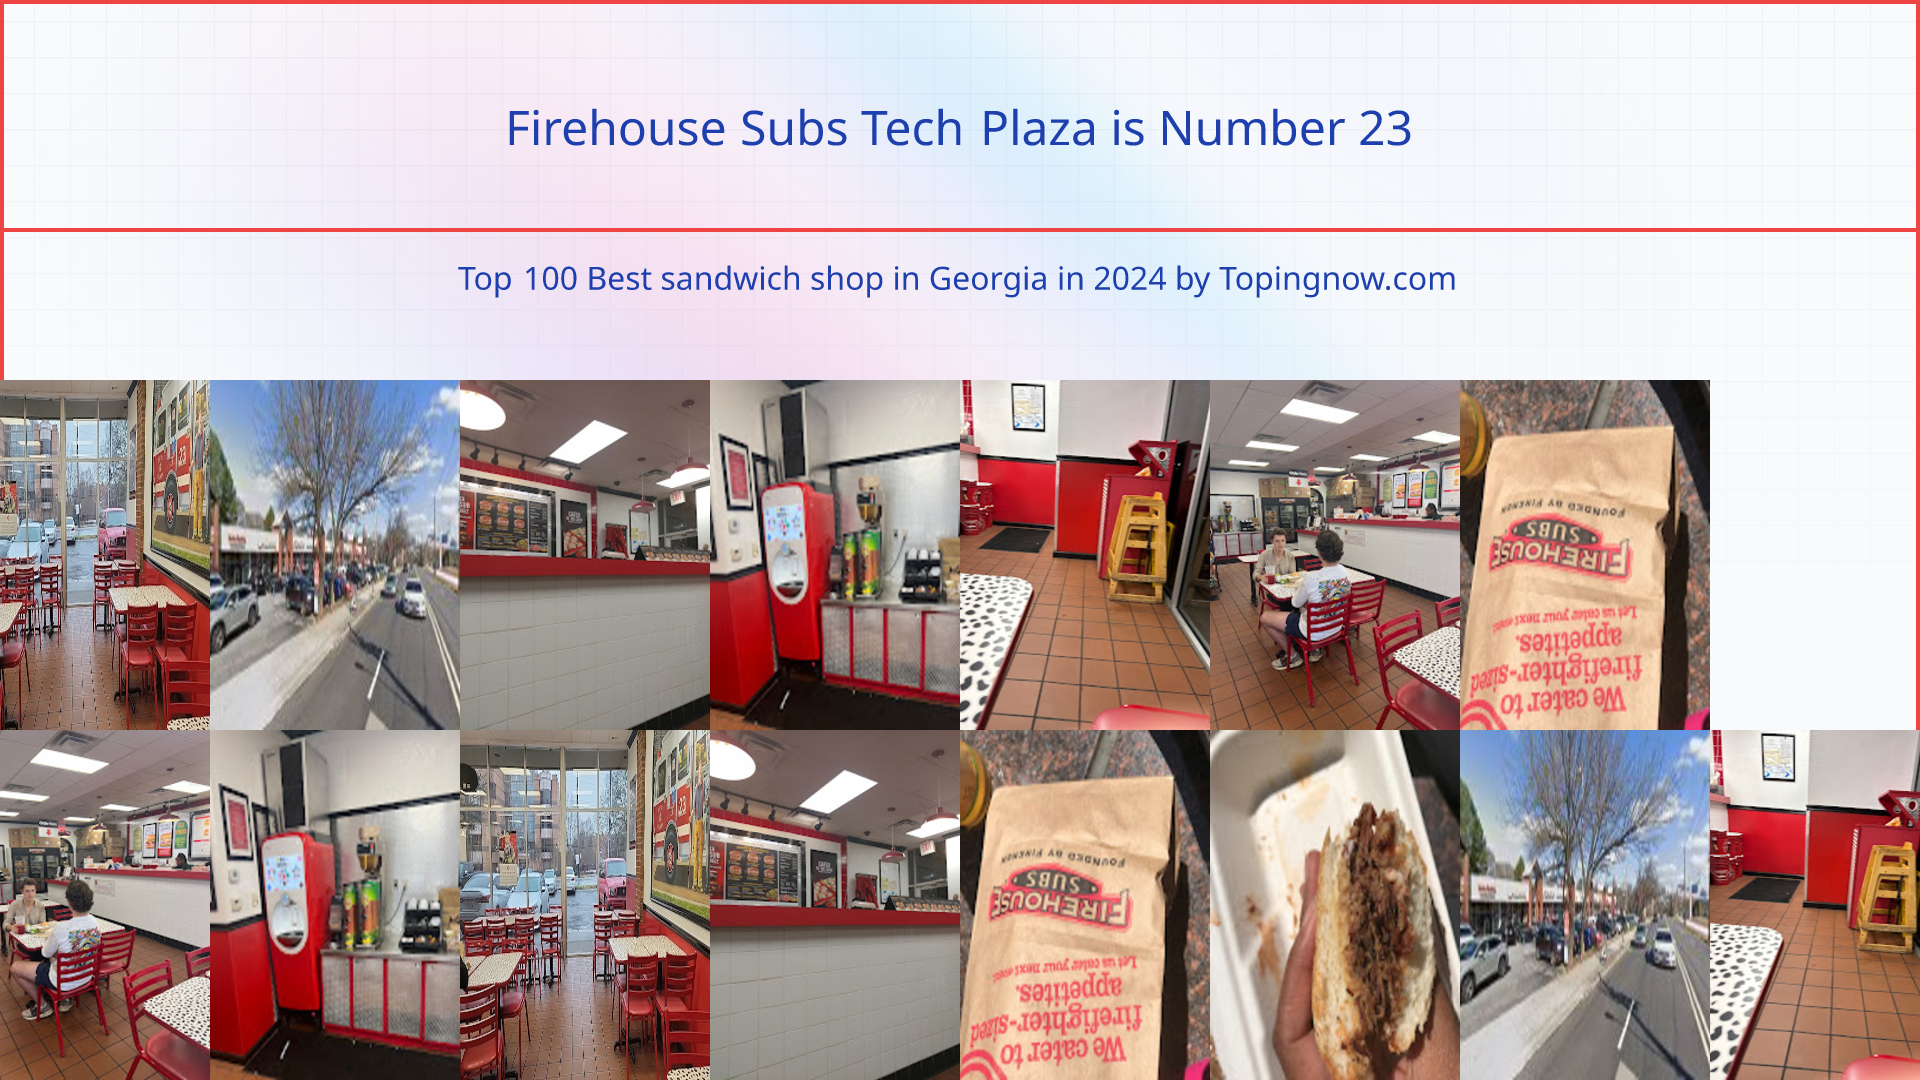 Firehouse Subs Tech Plaza: Top 100 Best sandwich shop in Georgia in 2024